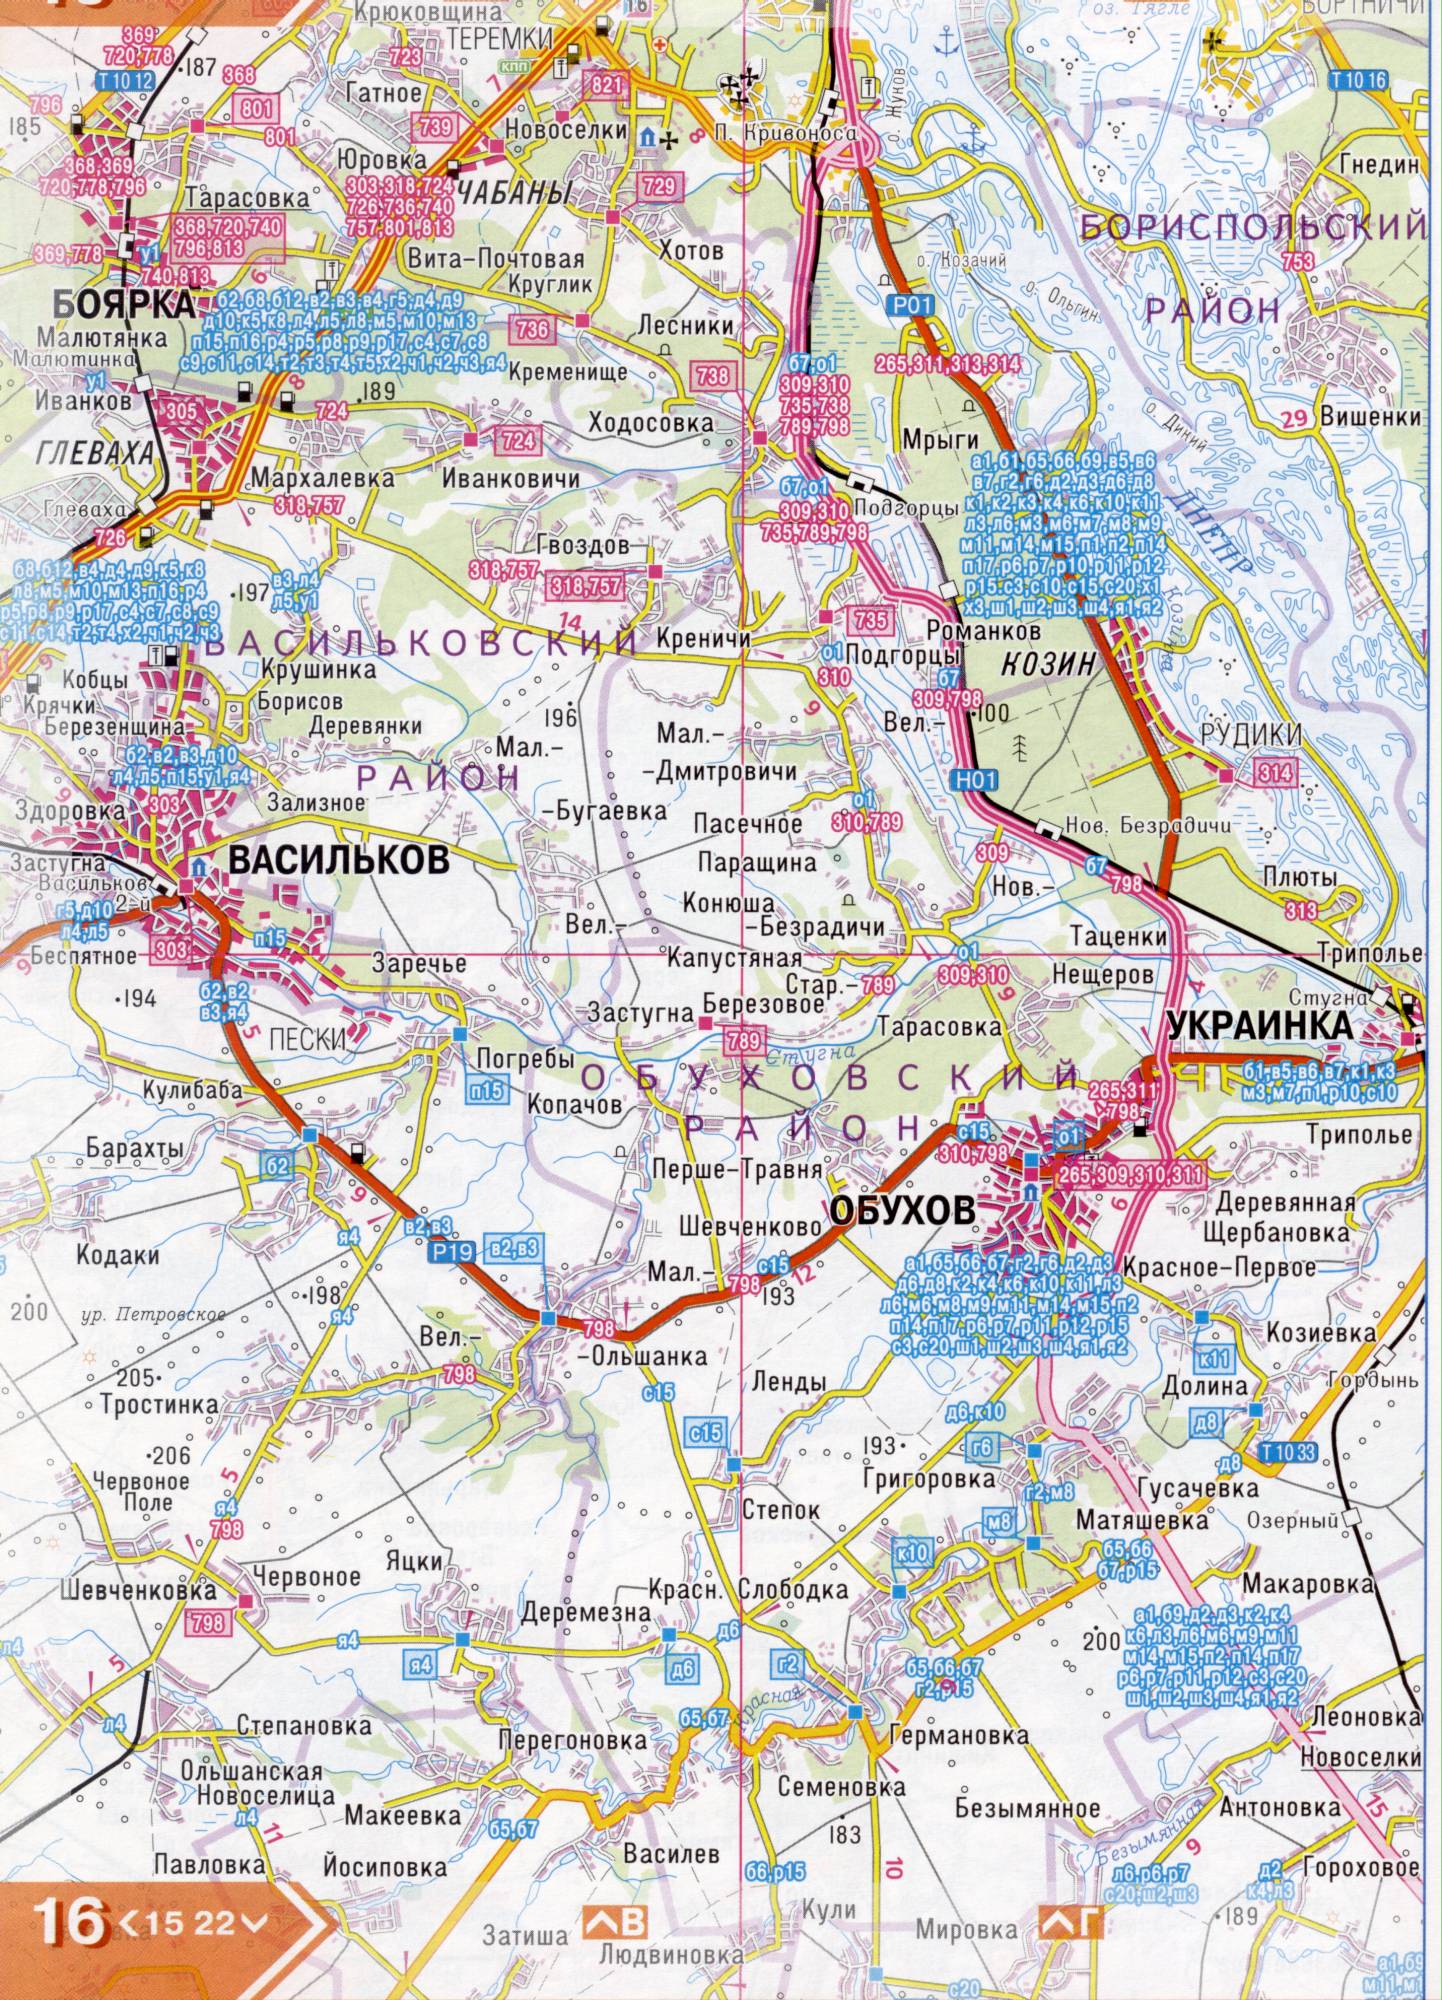 Atlas of the Kiev region. A detailed map of the Kiev region of the atlas of highways. Kyiv region on a detailed map of scale 1cm = 3km. Download free, C3 - Vasilkov